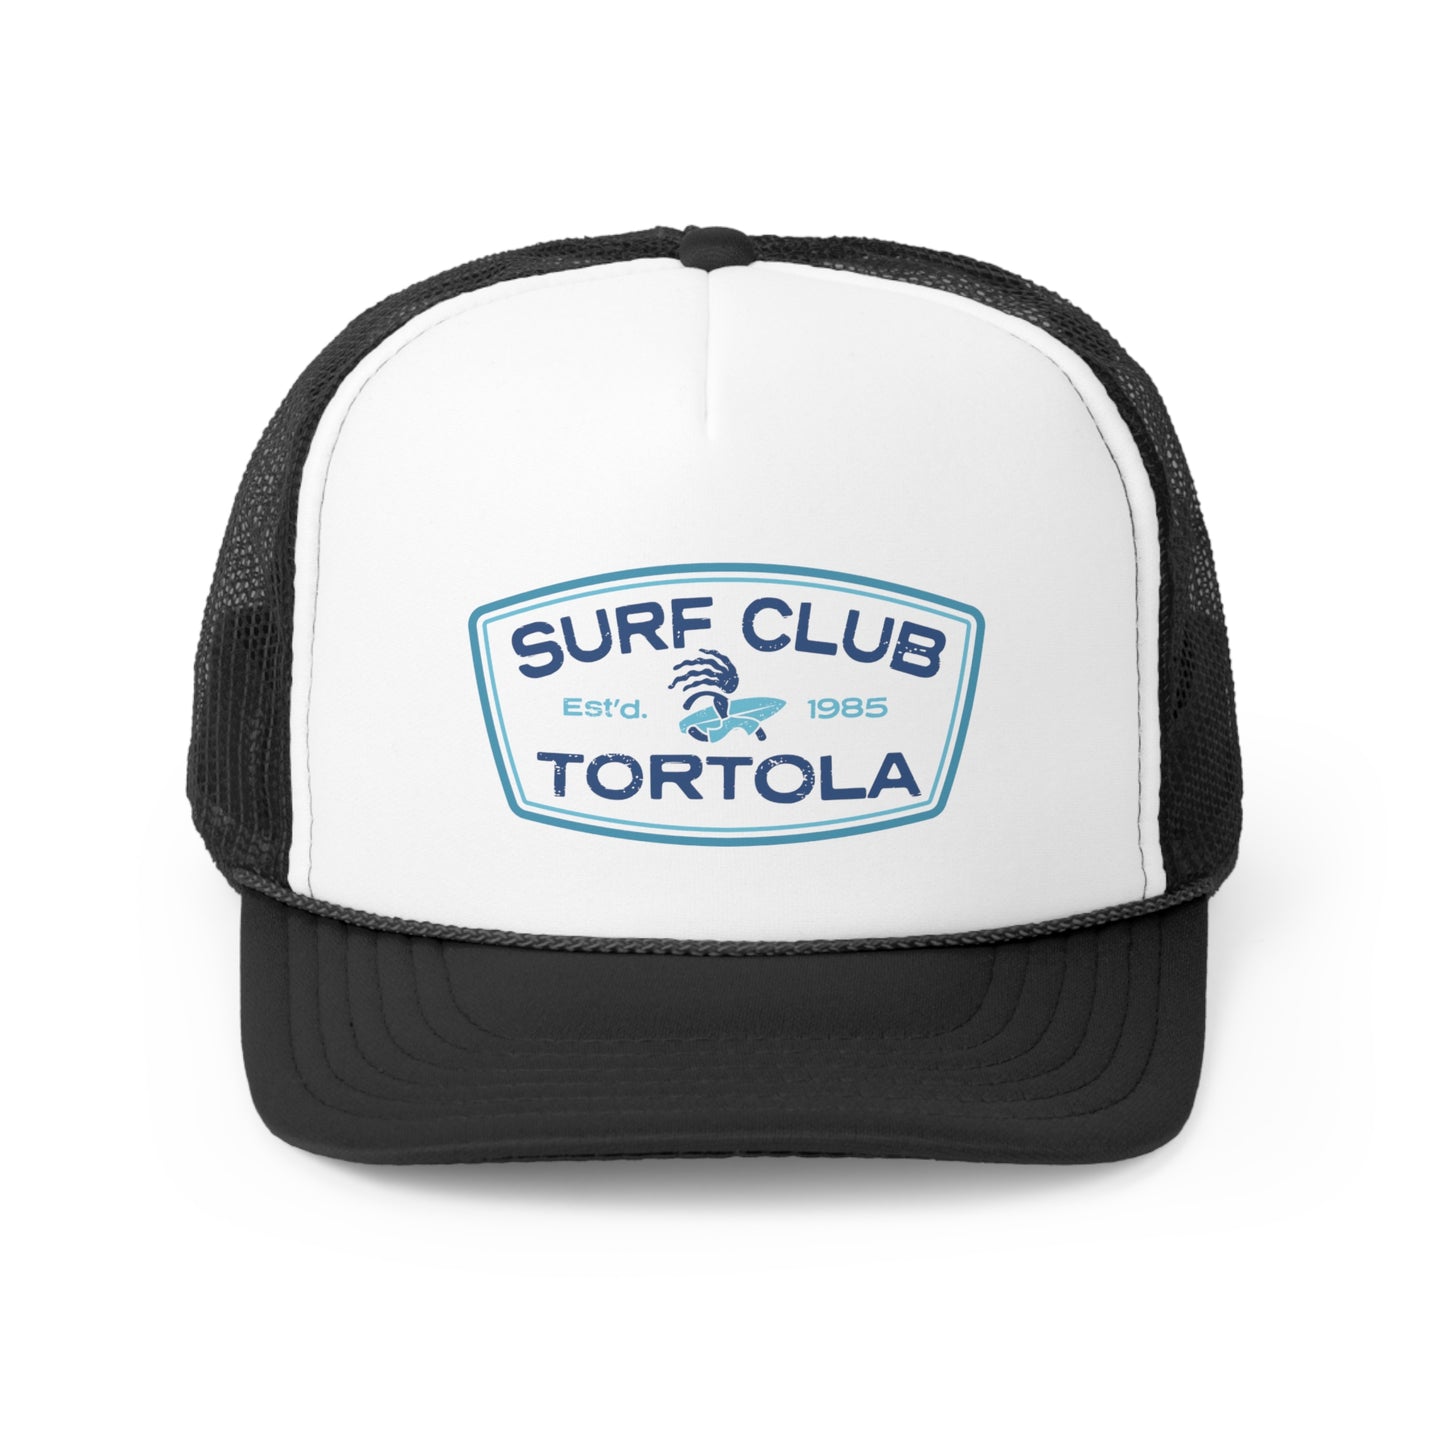 “Surf Club Tortola" Mesh-Back Trucker Cap